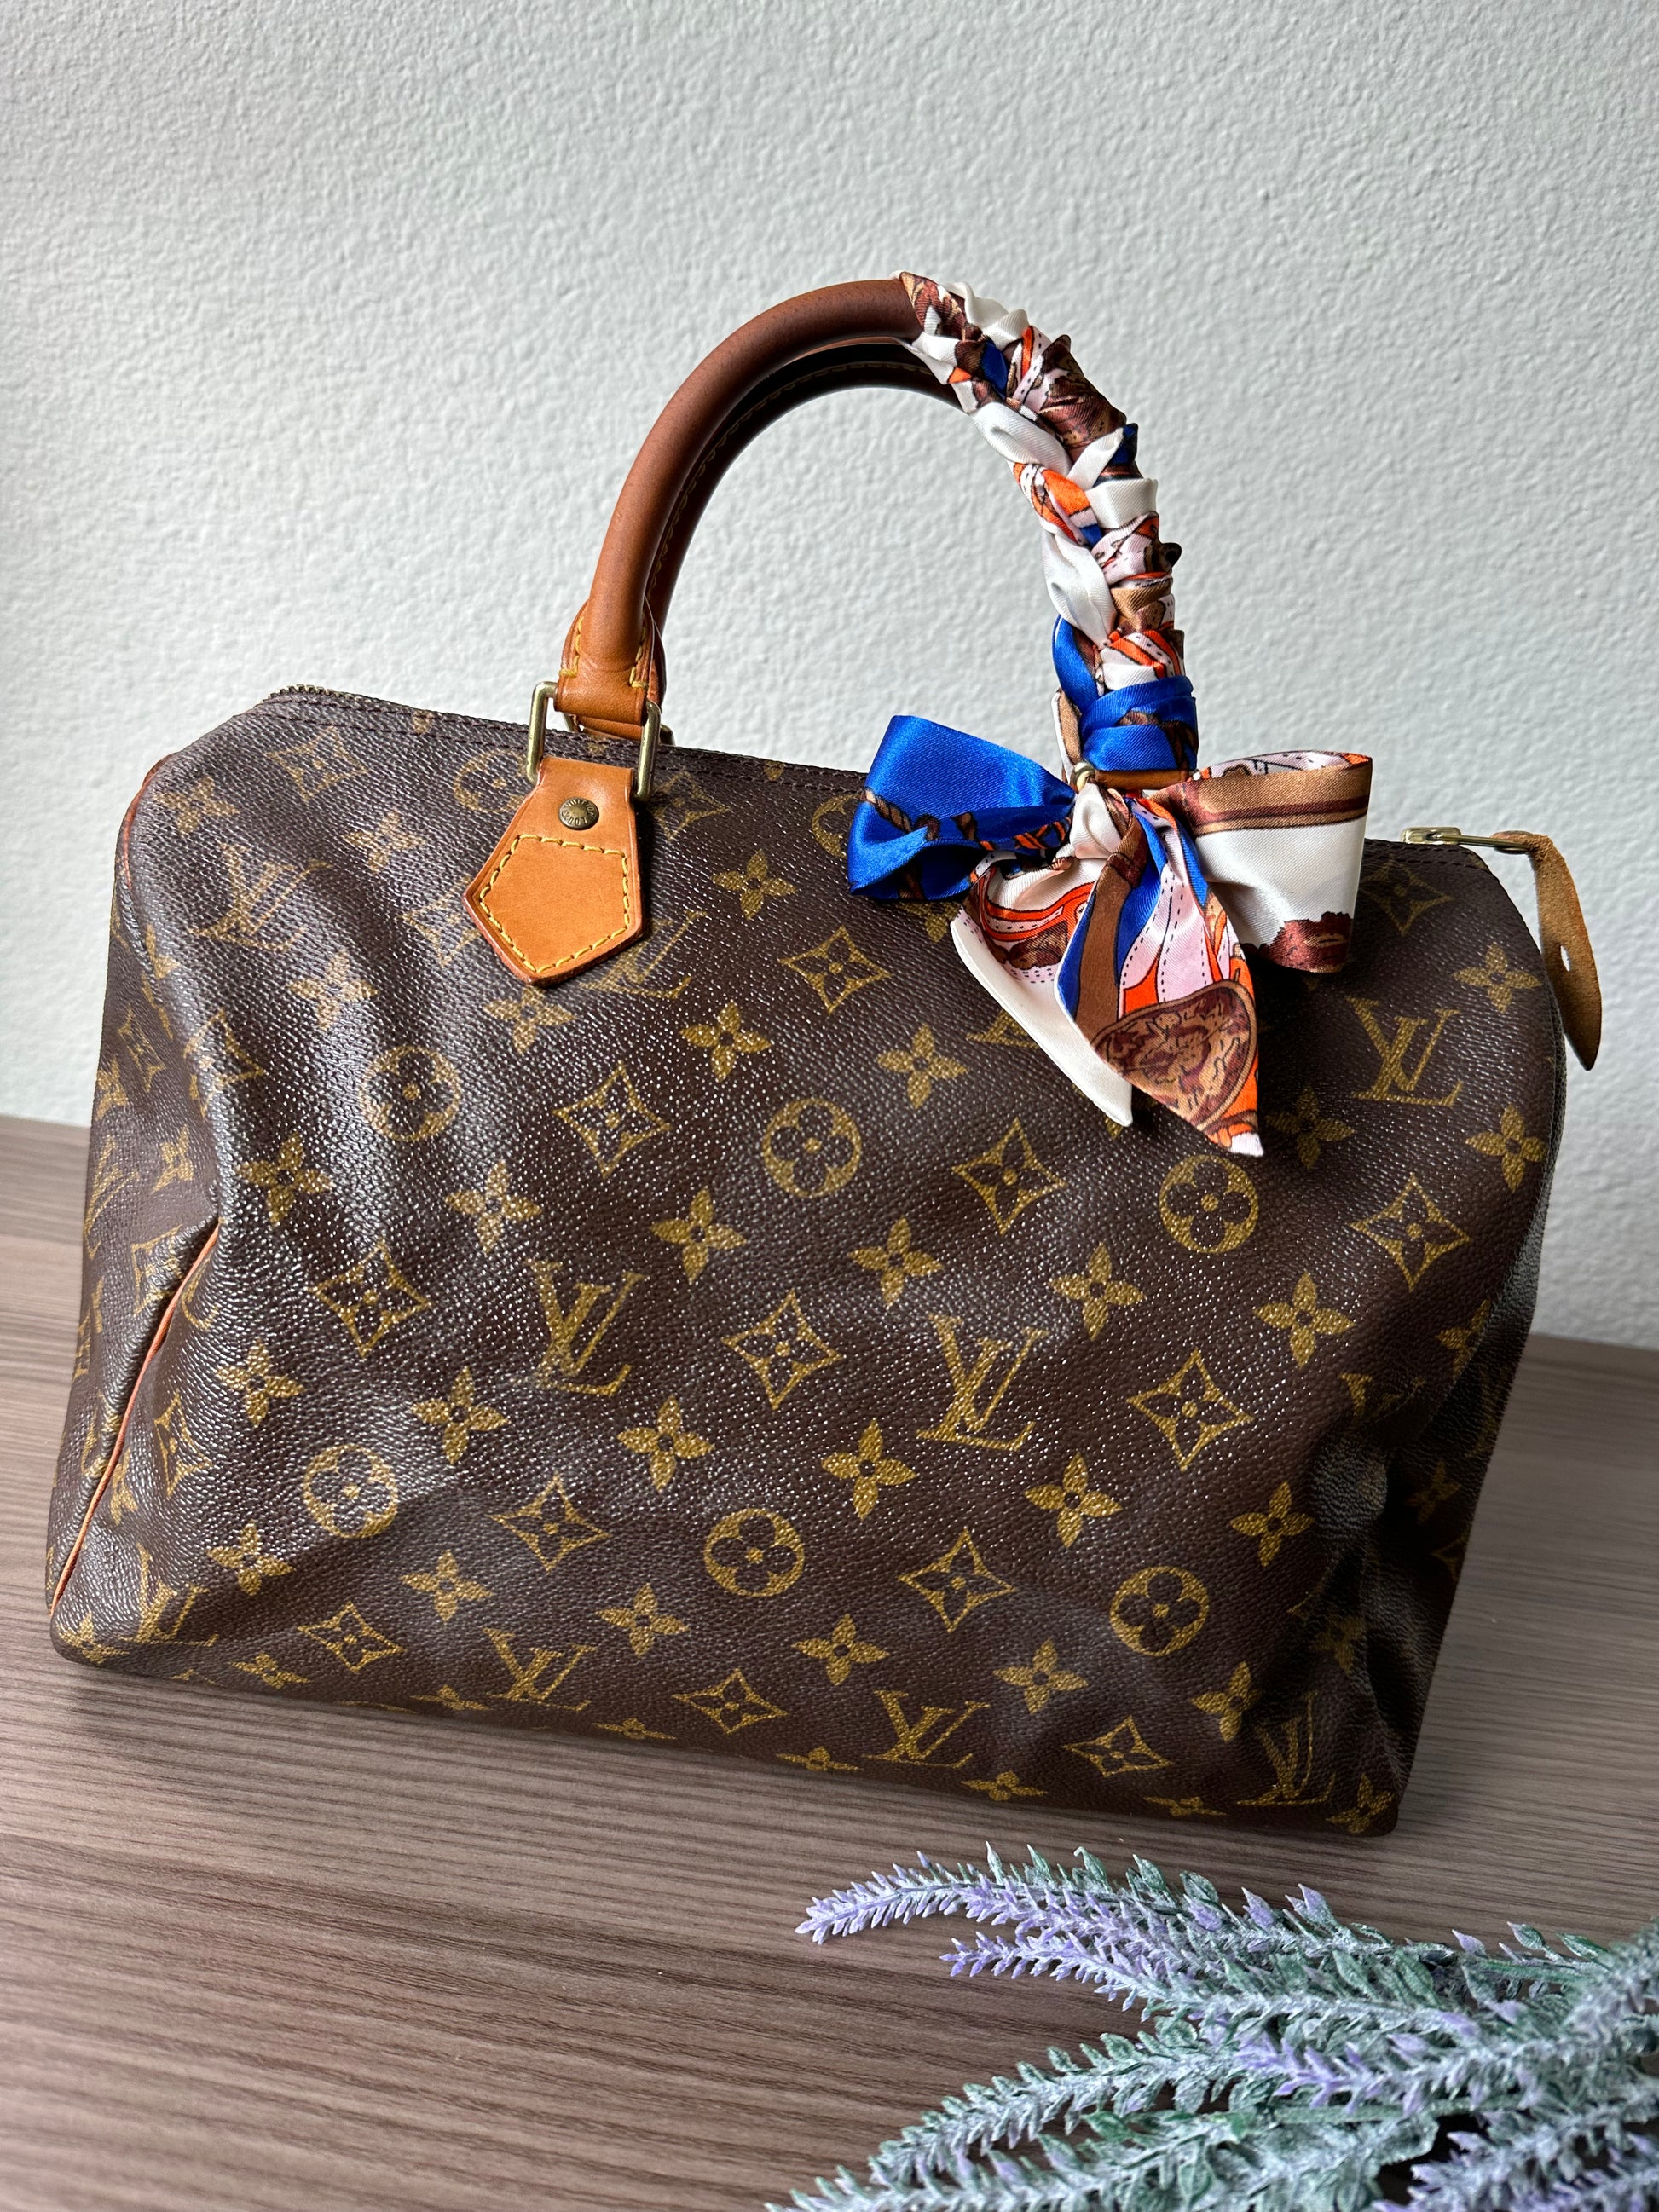 Pre Owned Authentic Louis Vuitton Handbags